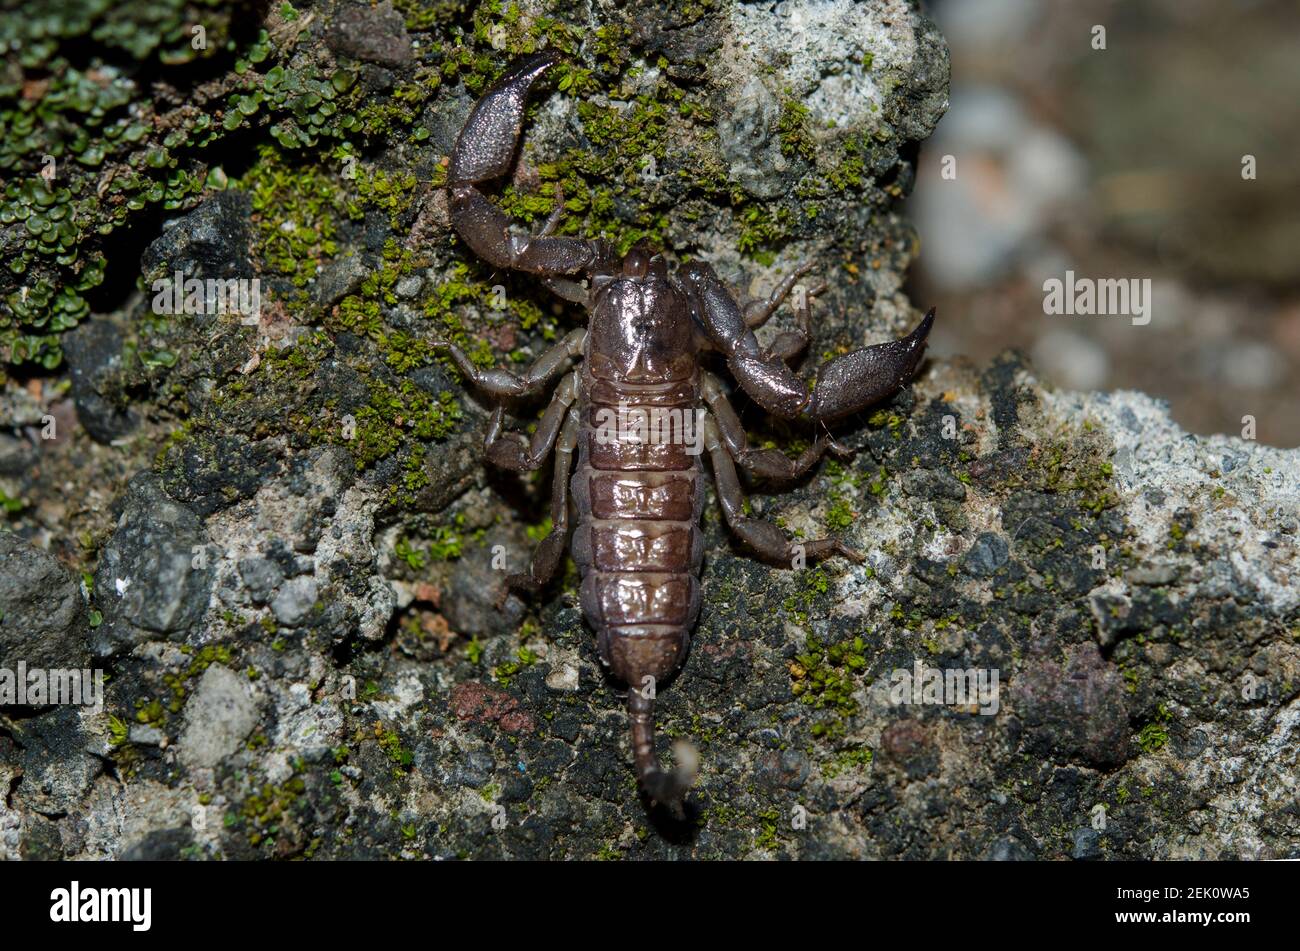 Australian Rainforest Scorpion, Liocheles waigiensis, Klungkung, Bali,  Indonesia Stock Photo - Alamy